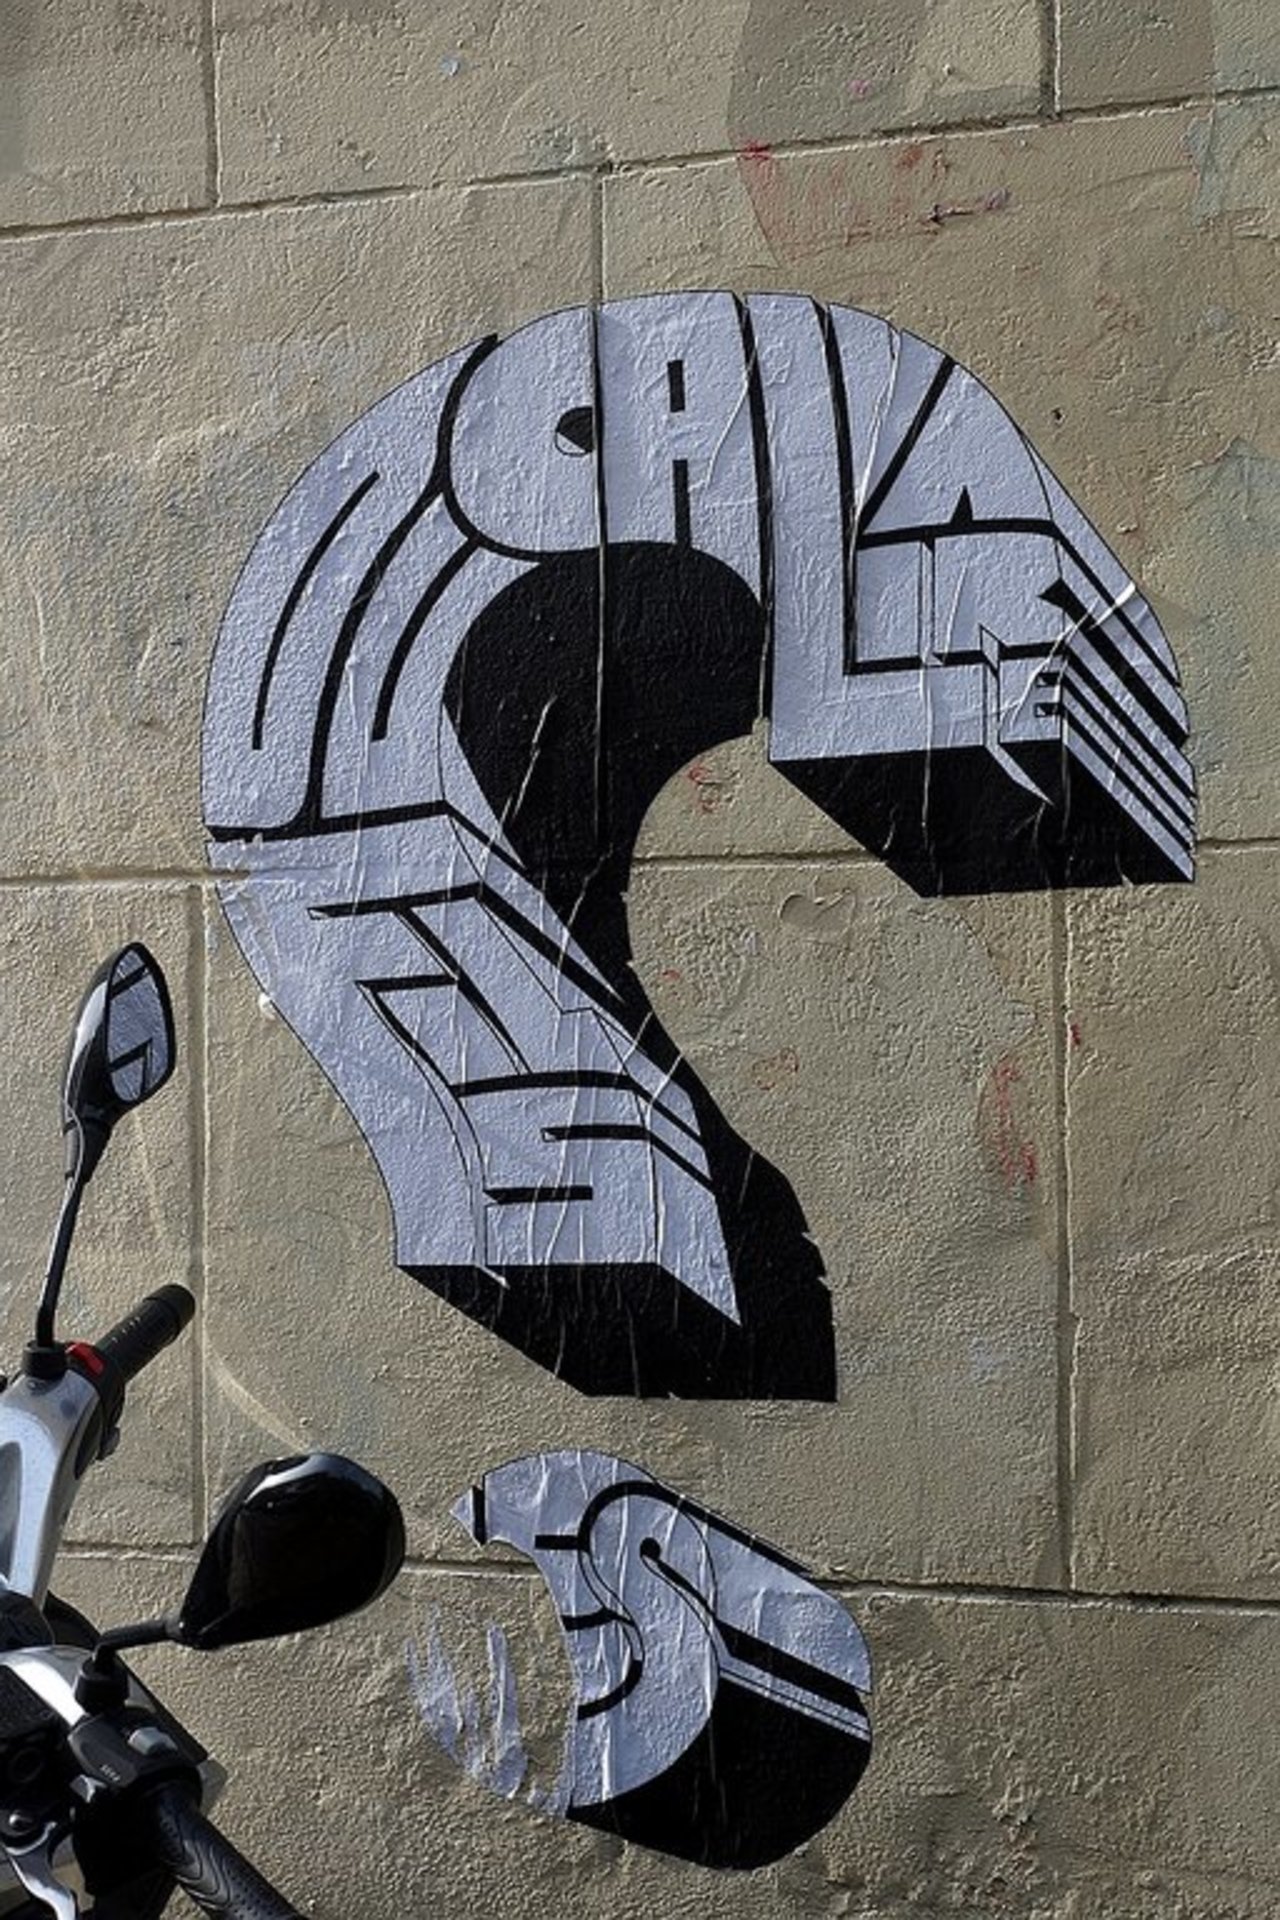 Street Art by anonymous in #Paris http://www.urbacolors.com #art #mural #graffiti #streetart https://t.co/TvcTaIBwlt